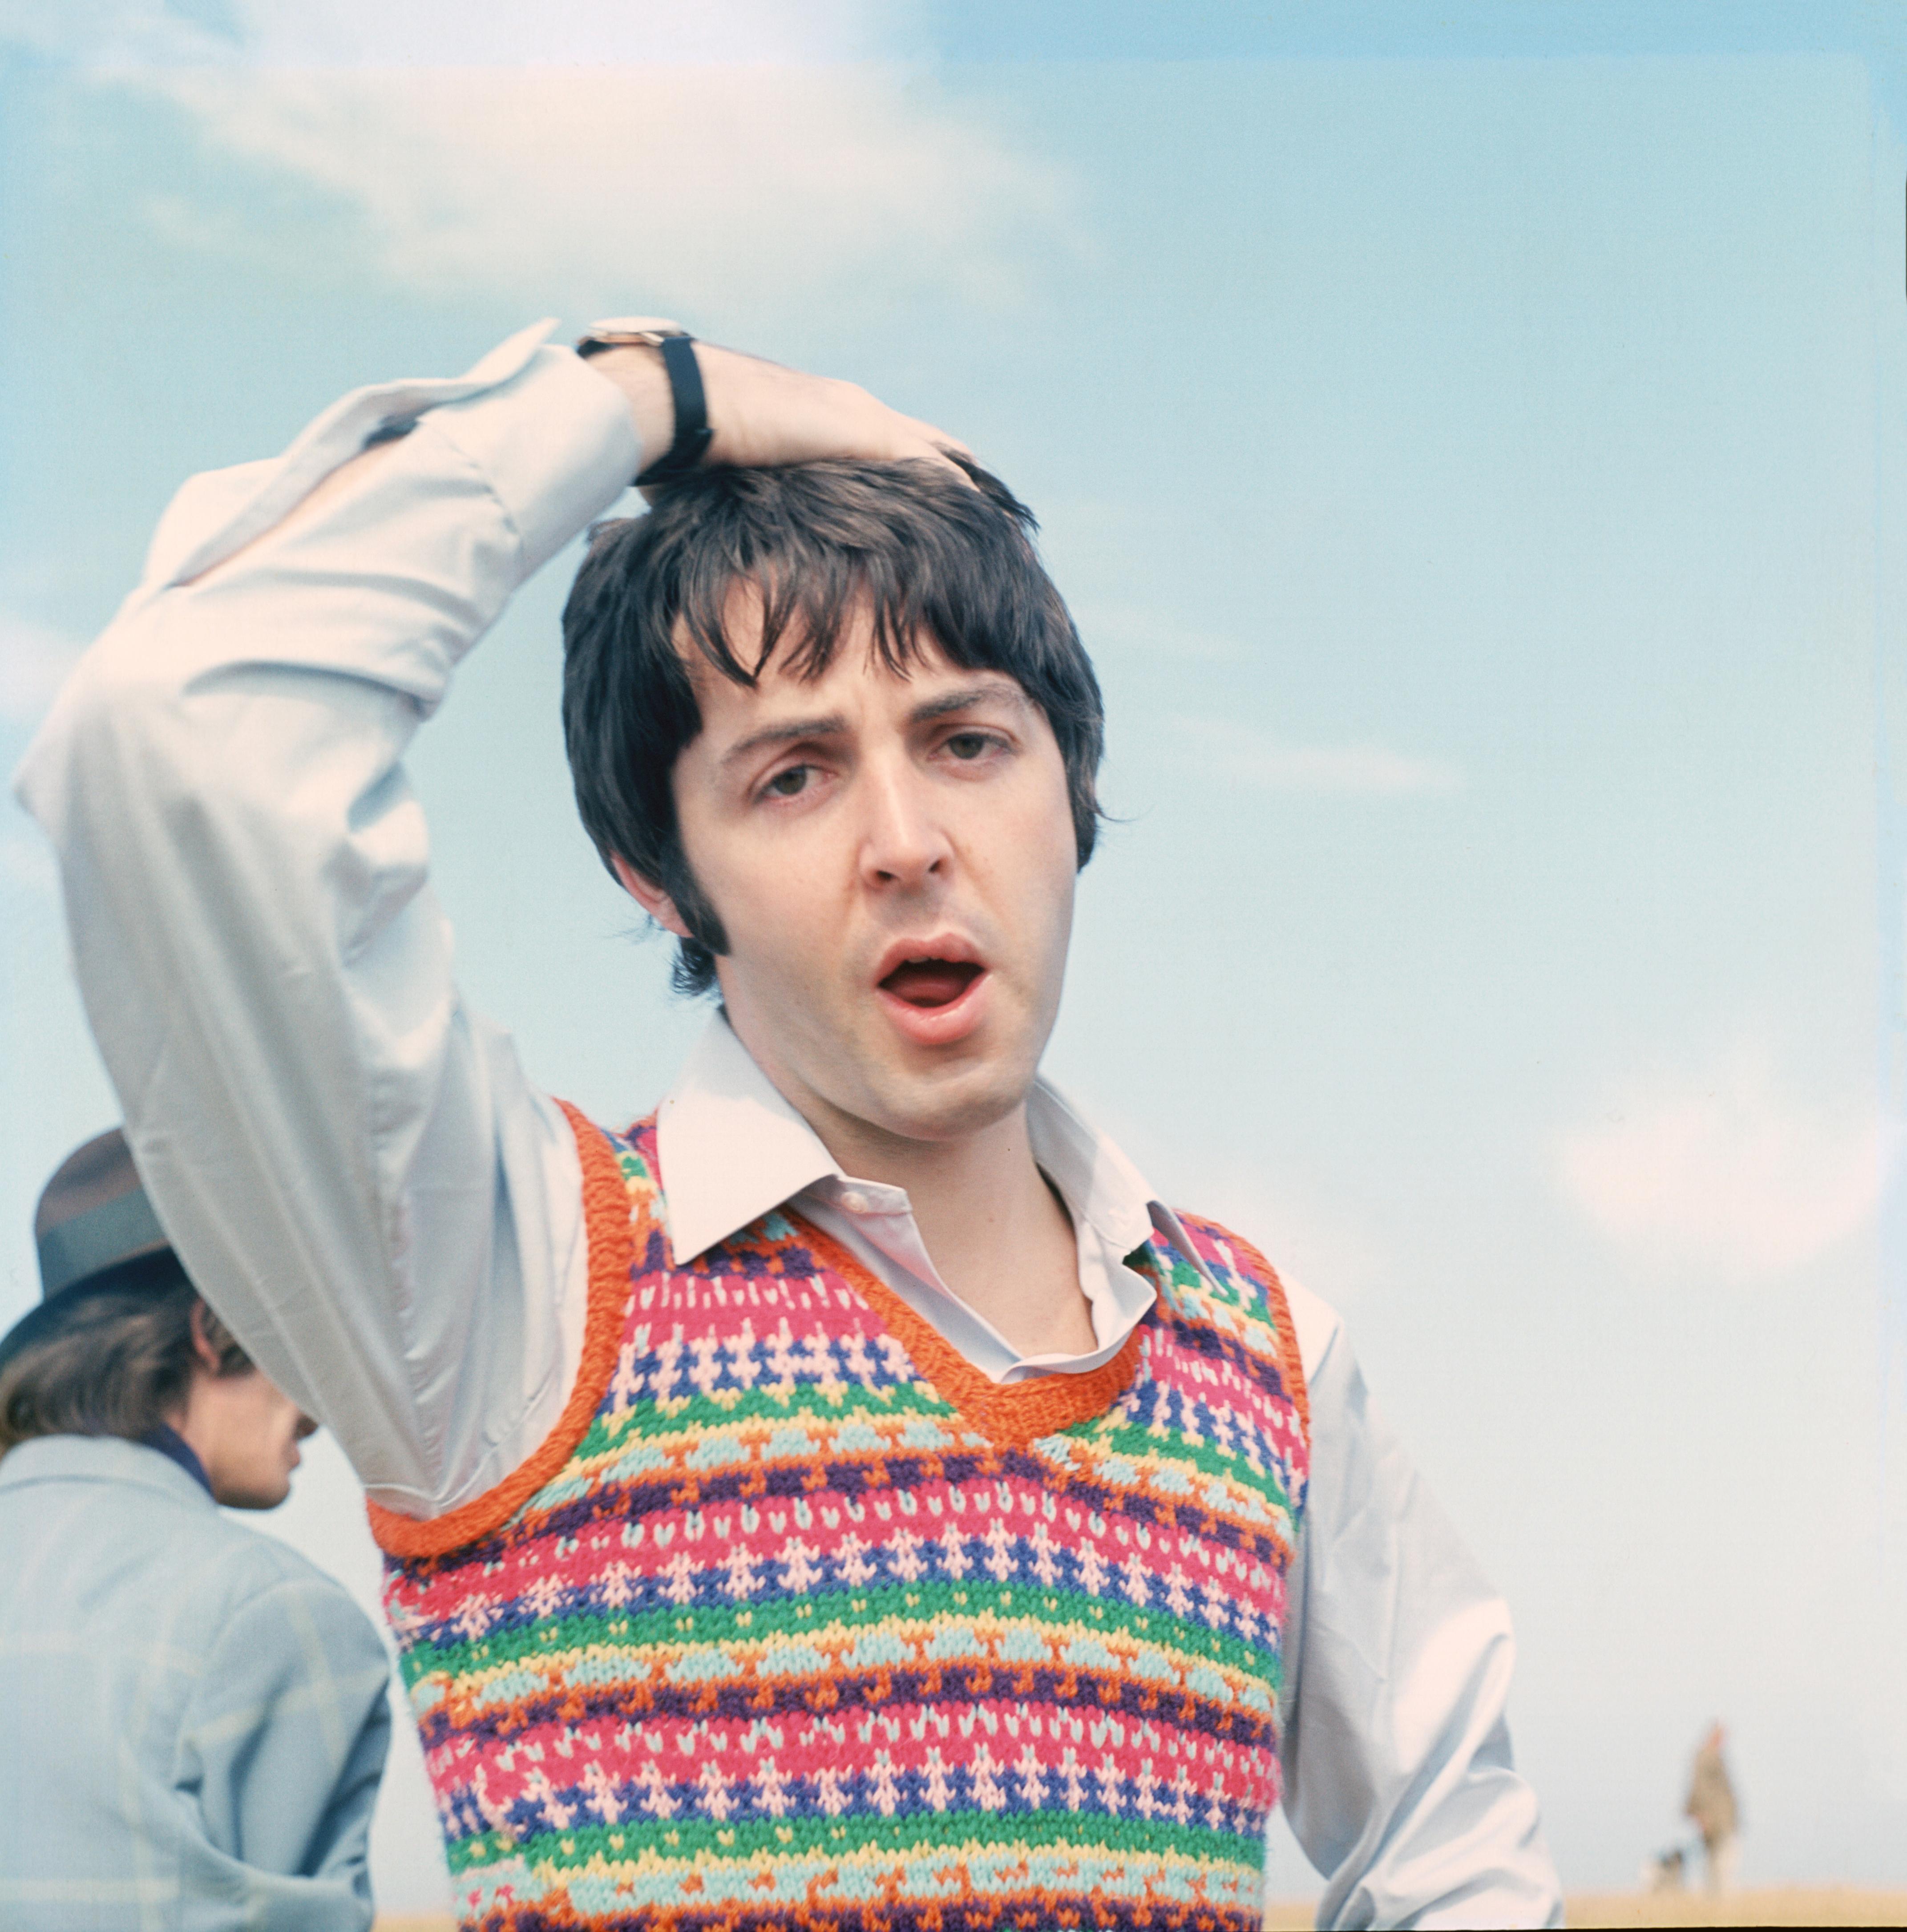 Unknown Portrait Photograph - Paul McCartney: Blue Skies Globe Photos Fine Art Print